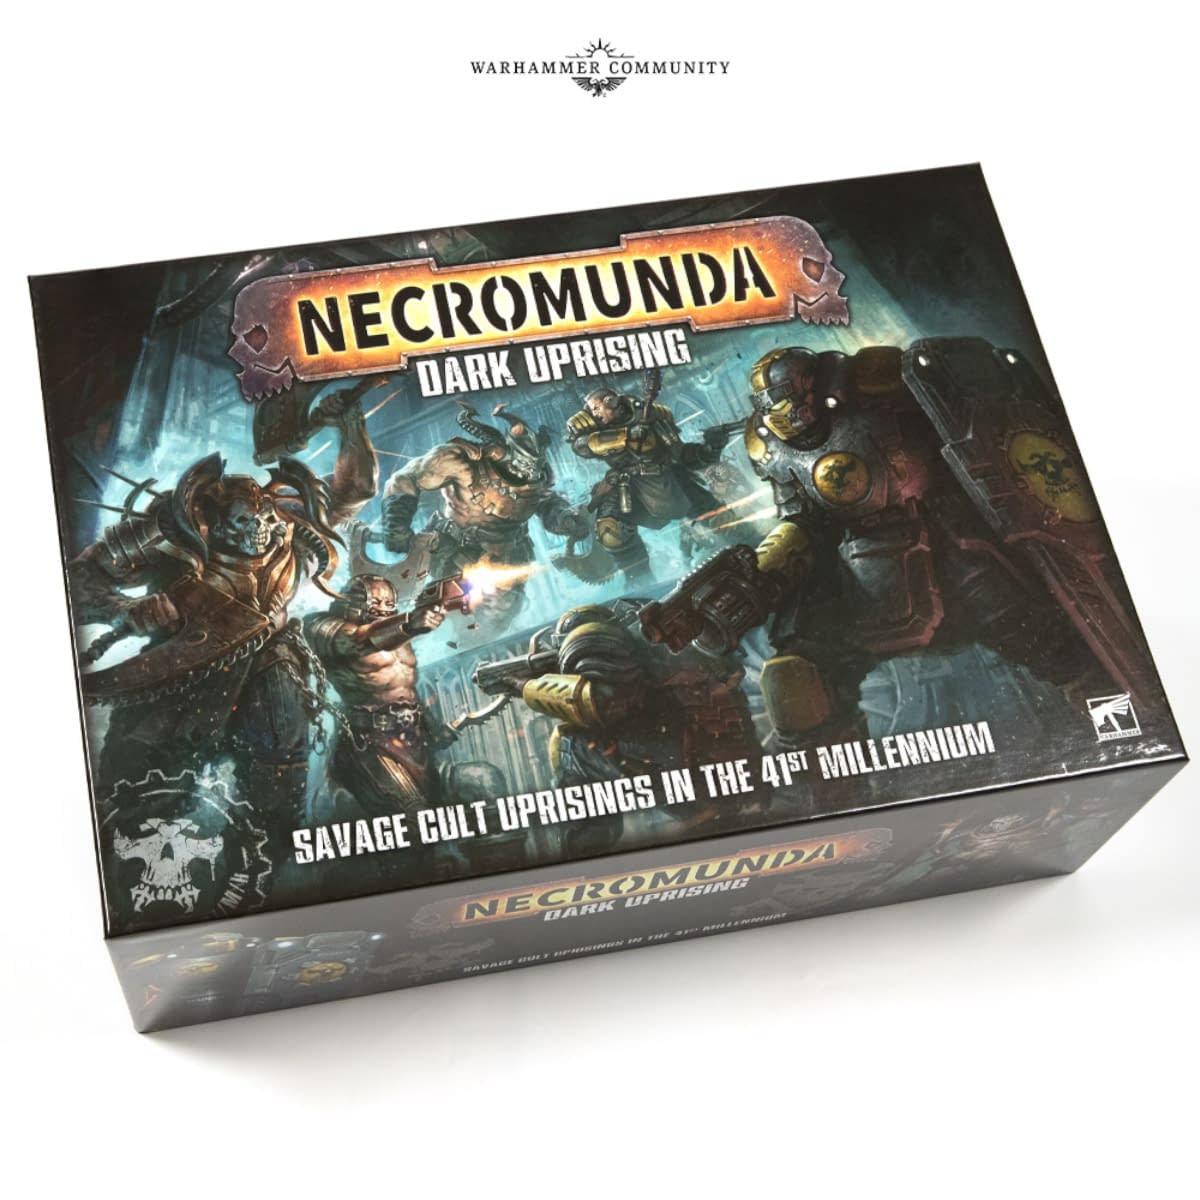 "Necromunda" Gets New Box-Set Treatment from Games Workshop